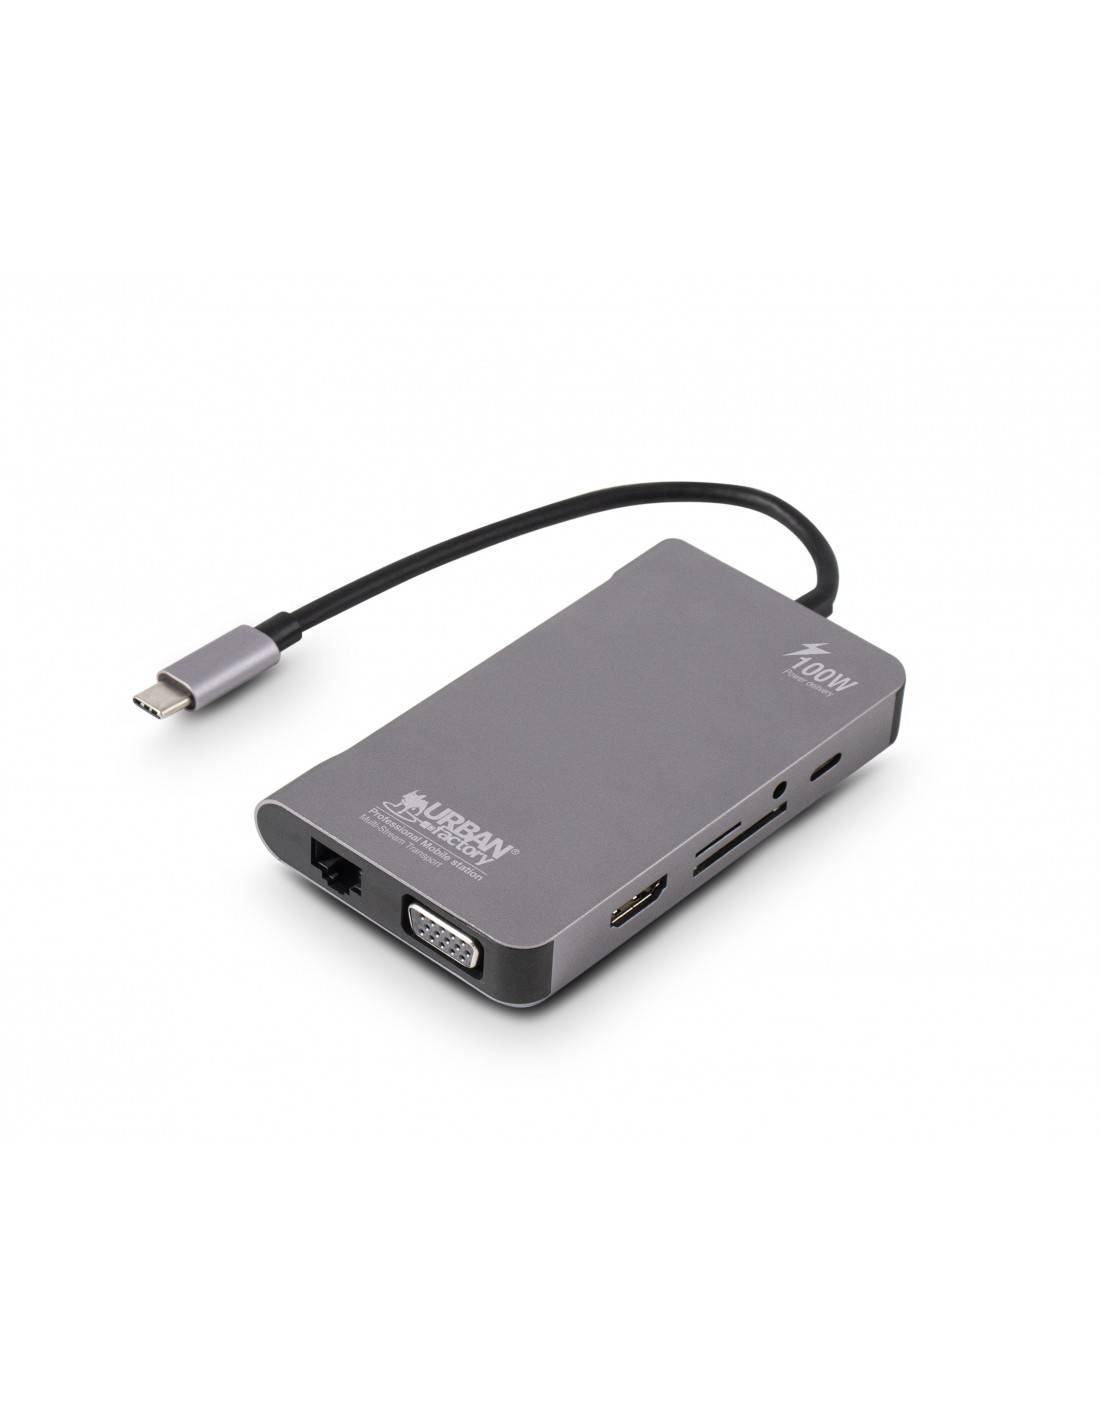 Rca Informatique - Image du produit : TYPE-C STATION TRAVEL 3X USB-A 3.1 VGA/HDMI 4K SIDEREAL GRAY